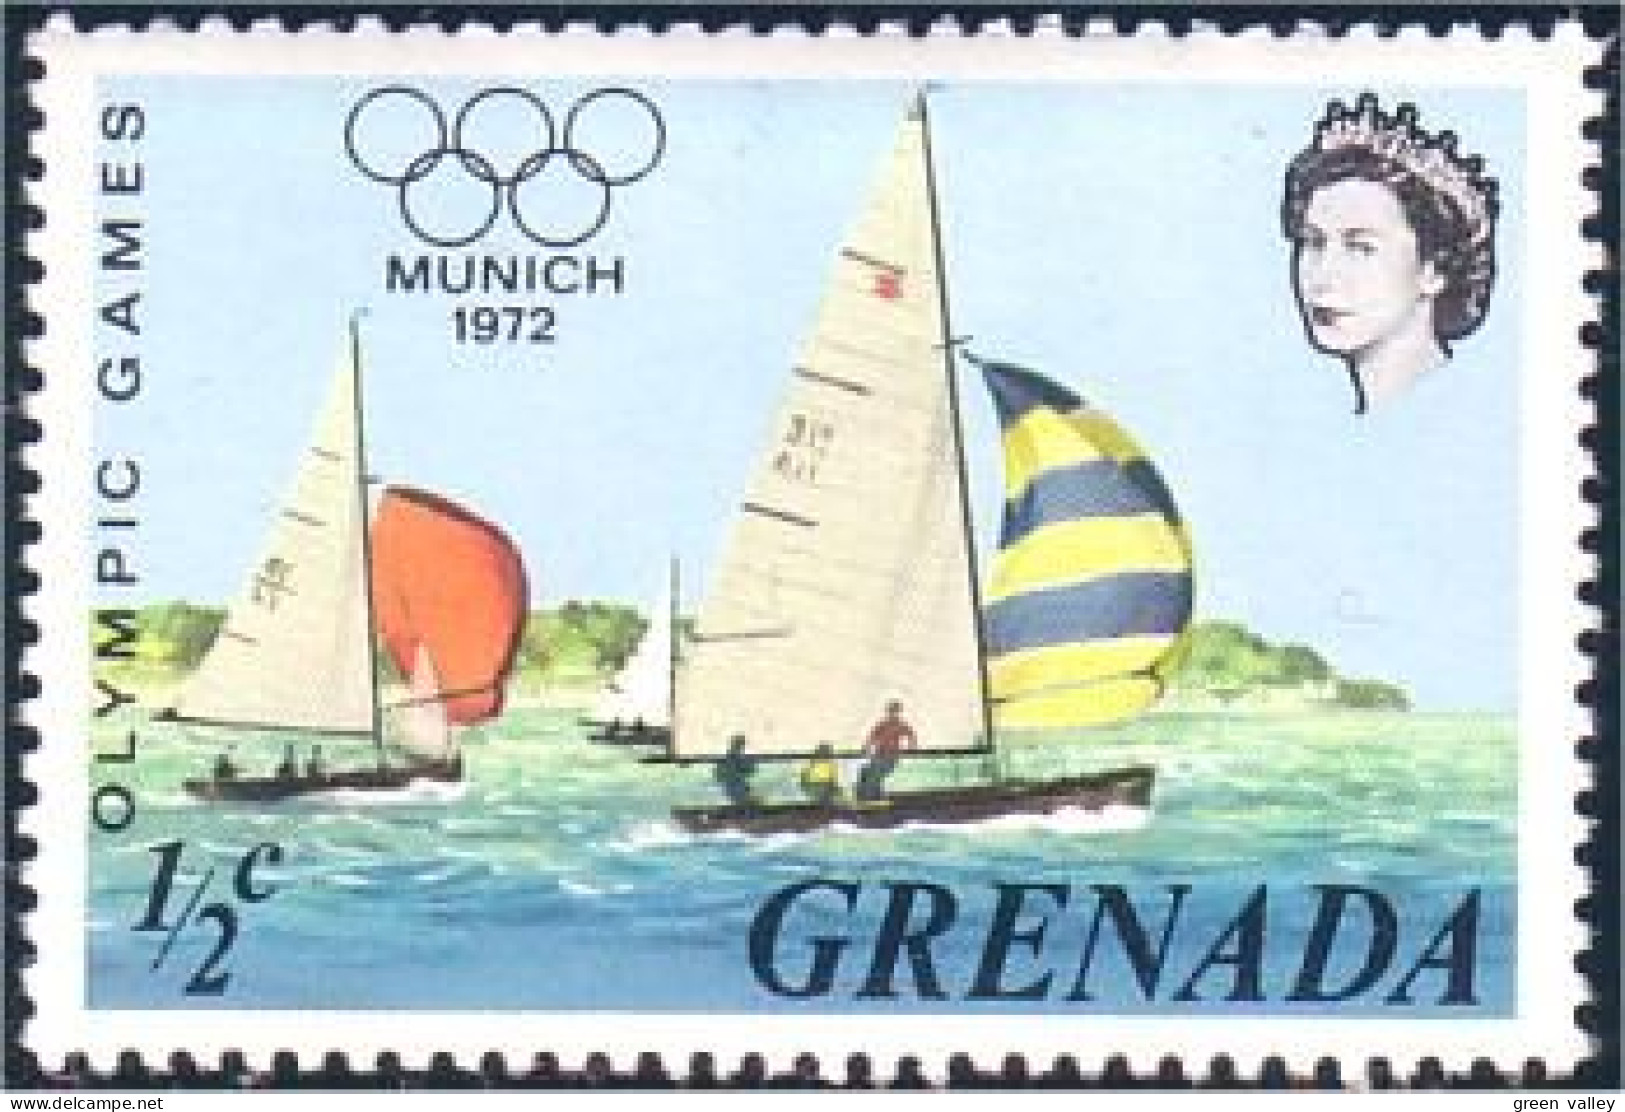 460 Grenada Munich 72 Voilier Sailing Ship MNH ** Neuf SC (GRE-3a) - Grenada (...-1974)